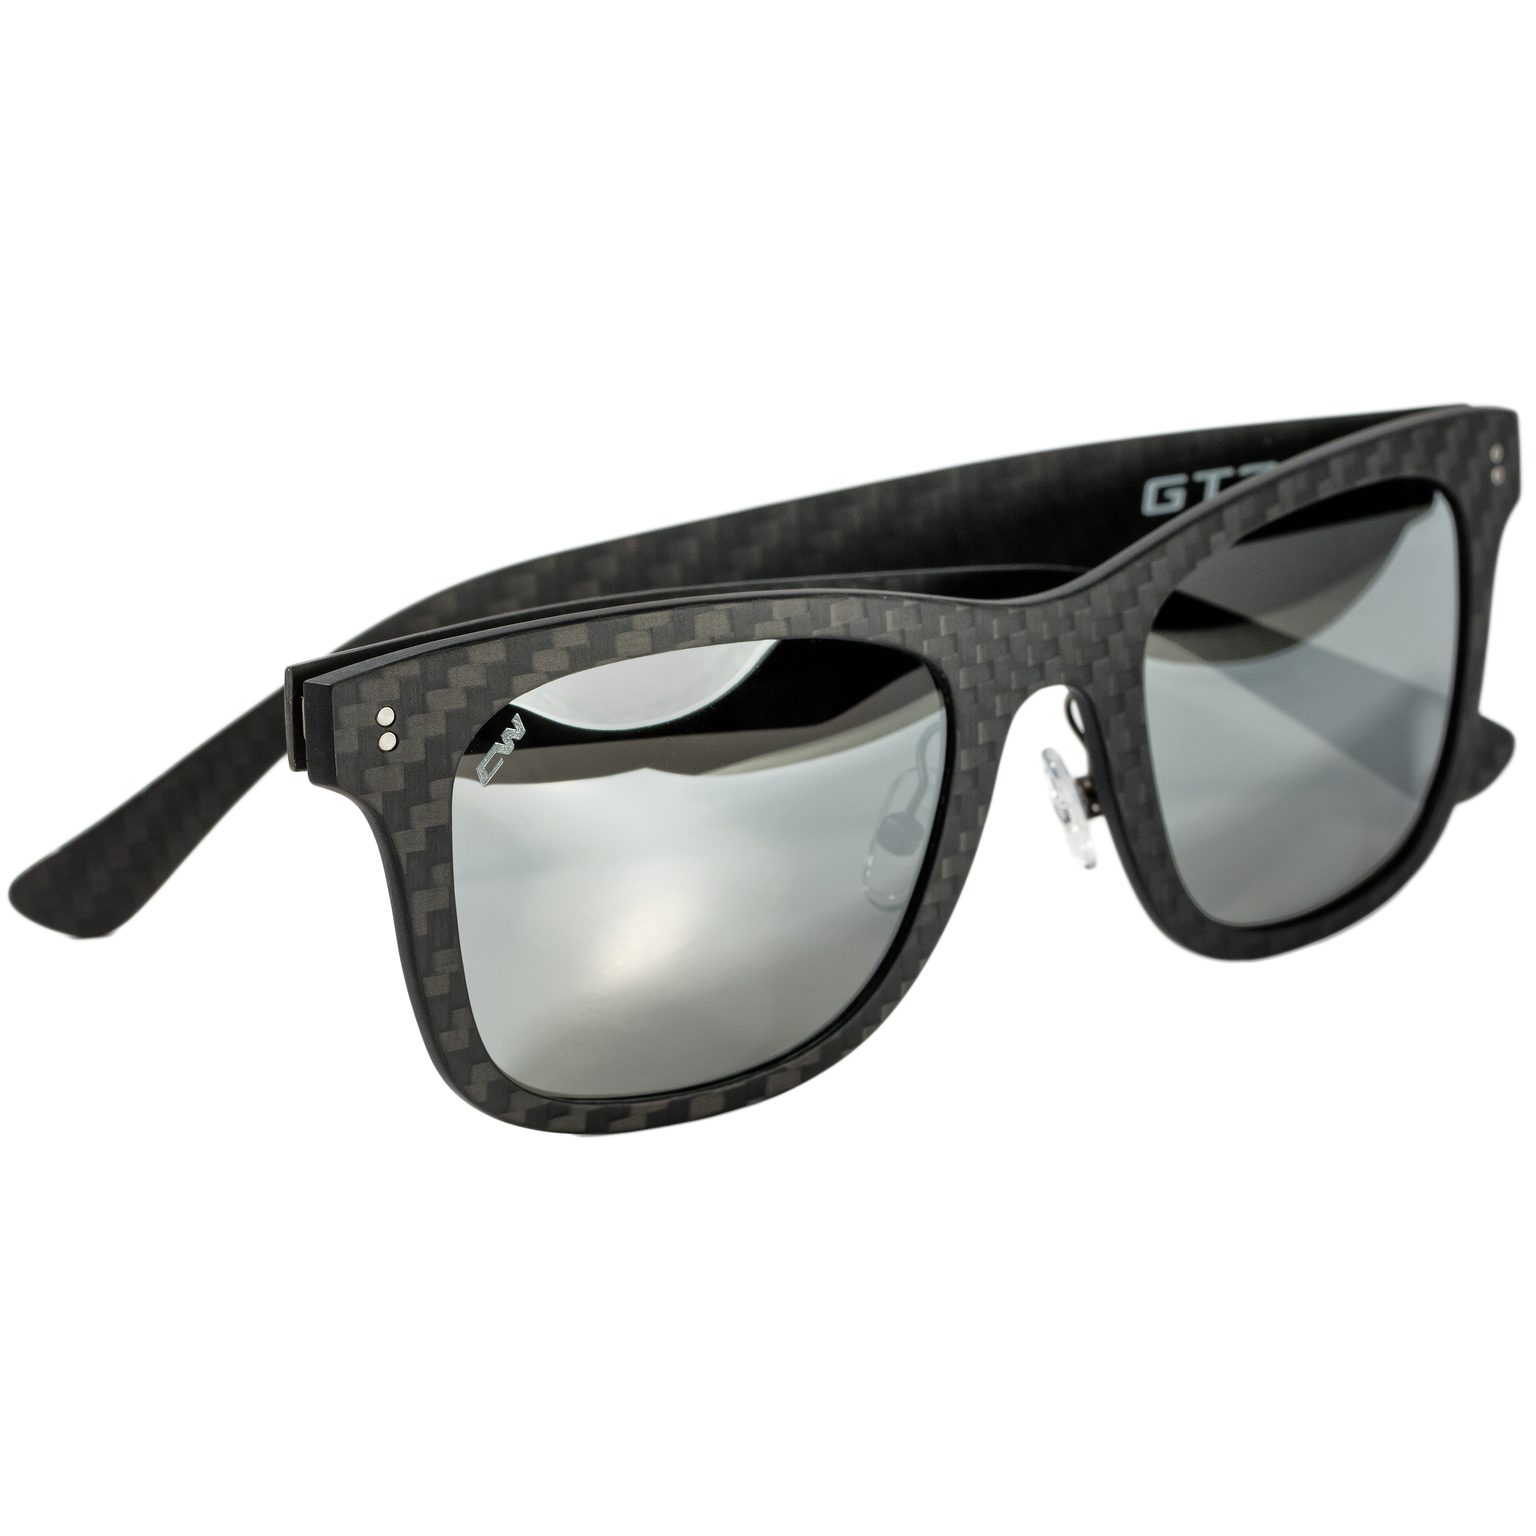 GT3 sunglasses Chrome Silver Mirror 3